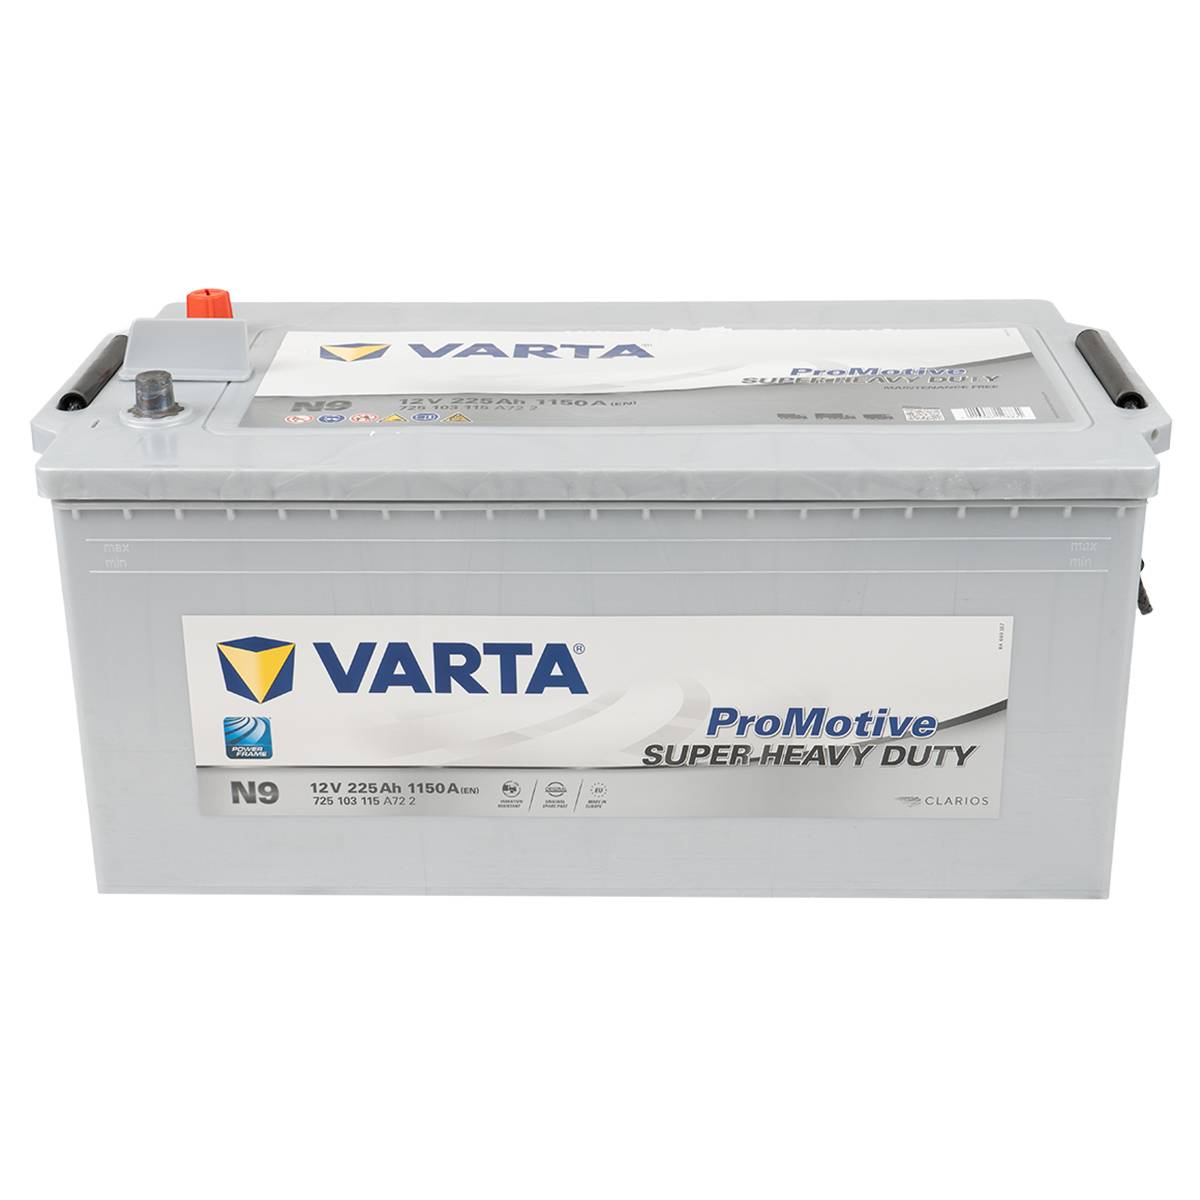 VARTA N9 ProMotive Super Heavy Duty 12V 225Ah 1150A LKW Batterie 725 103 115